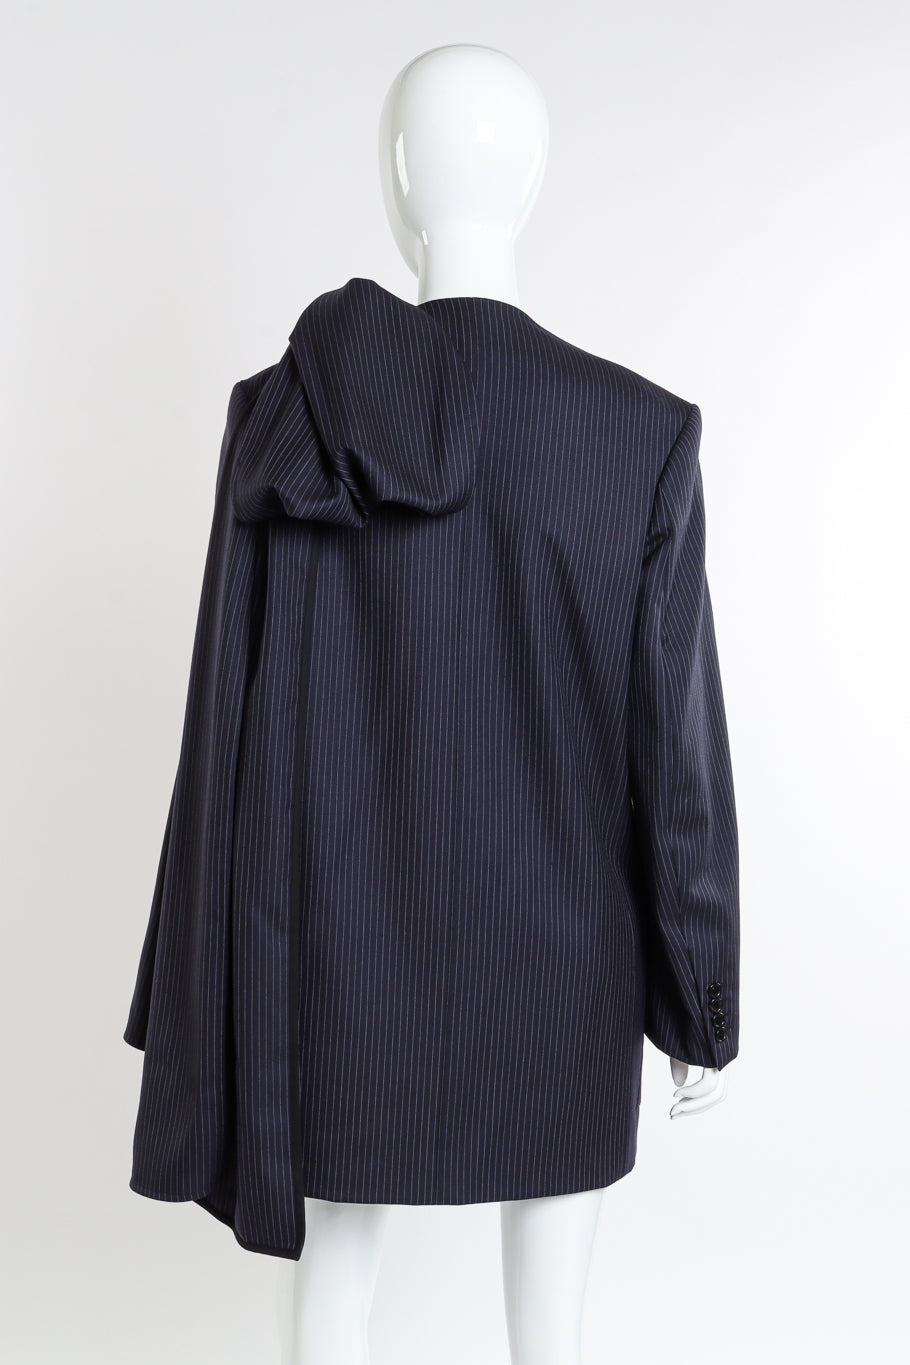 Nina Ricci Pinstripe Bow Jacket back on mannequin @recessla